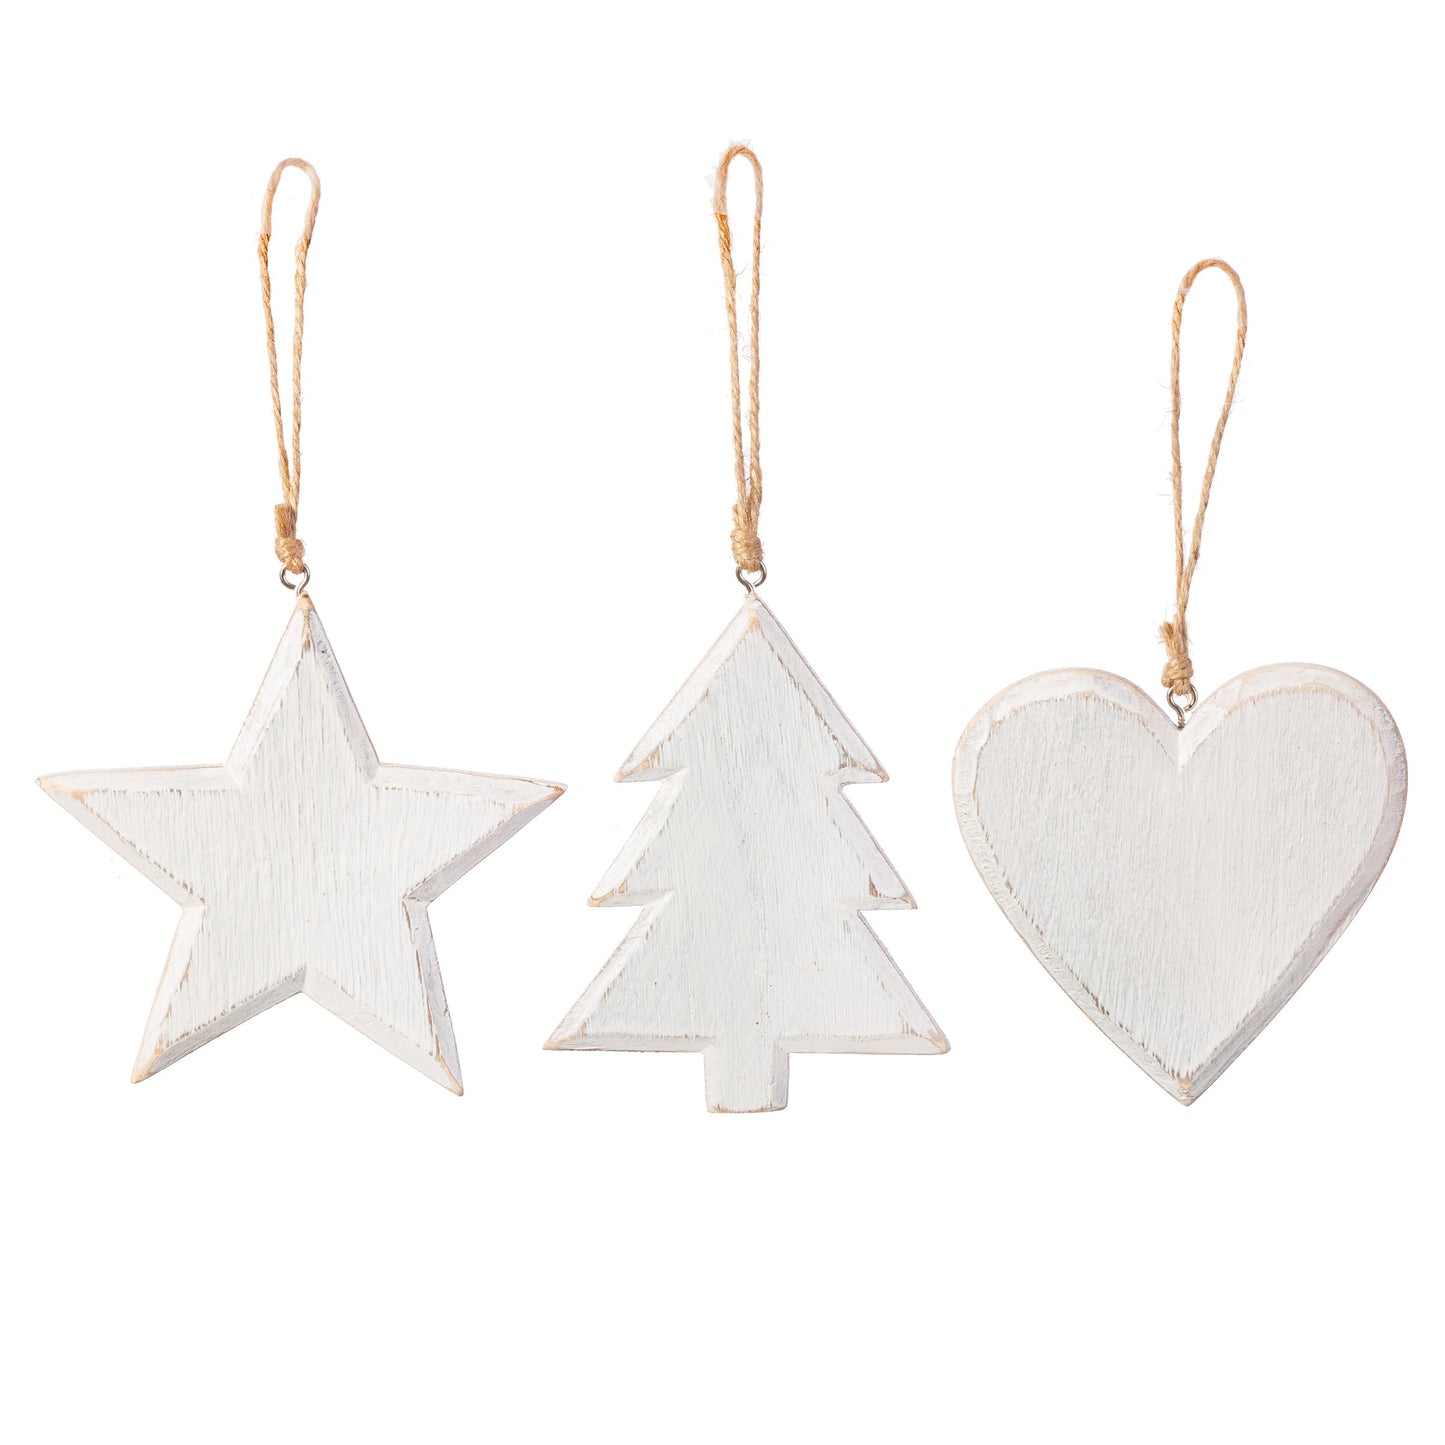 Whitewashed Wooden Christmas Tree Decorations (Set of 3)